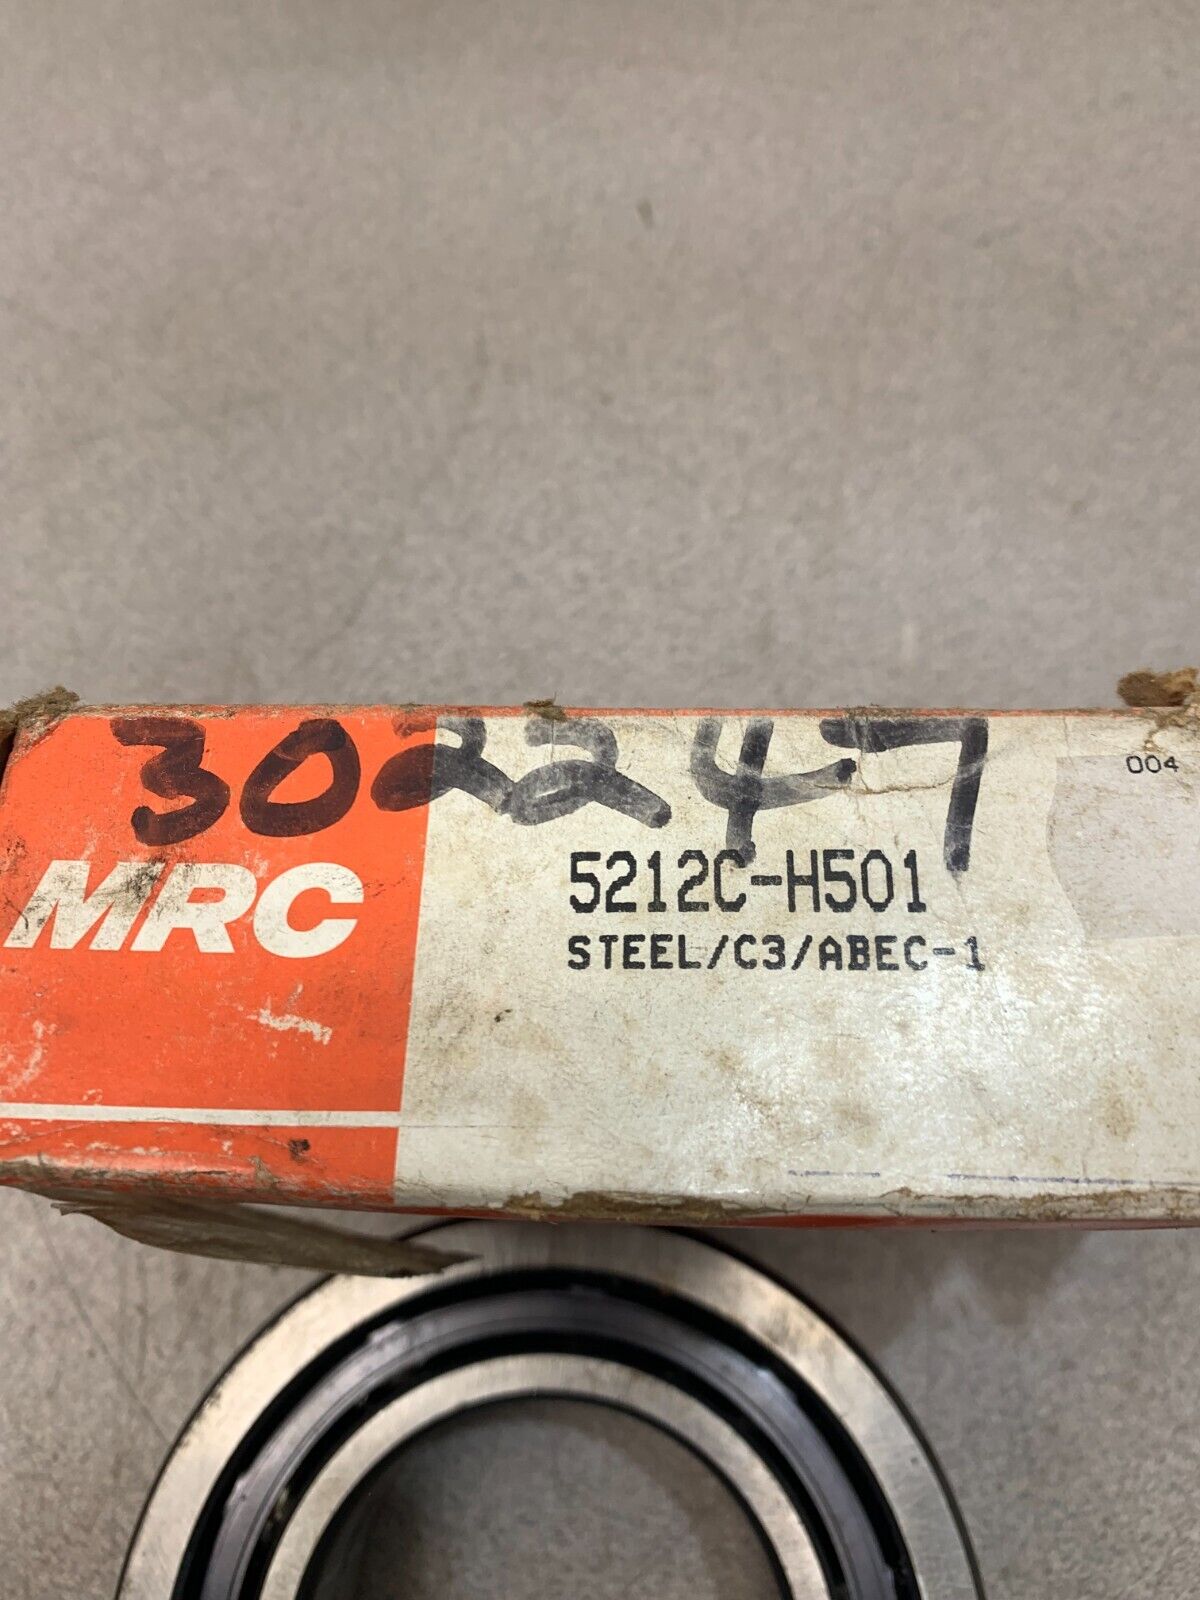 NEW IN BOX MRC ROLLER BEARING 5212C-H501